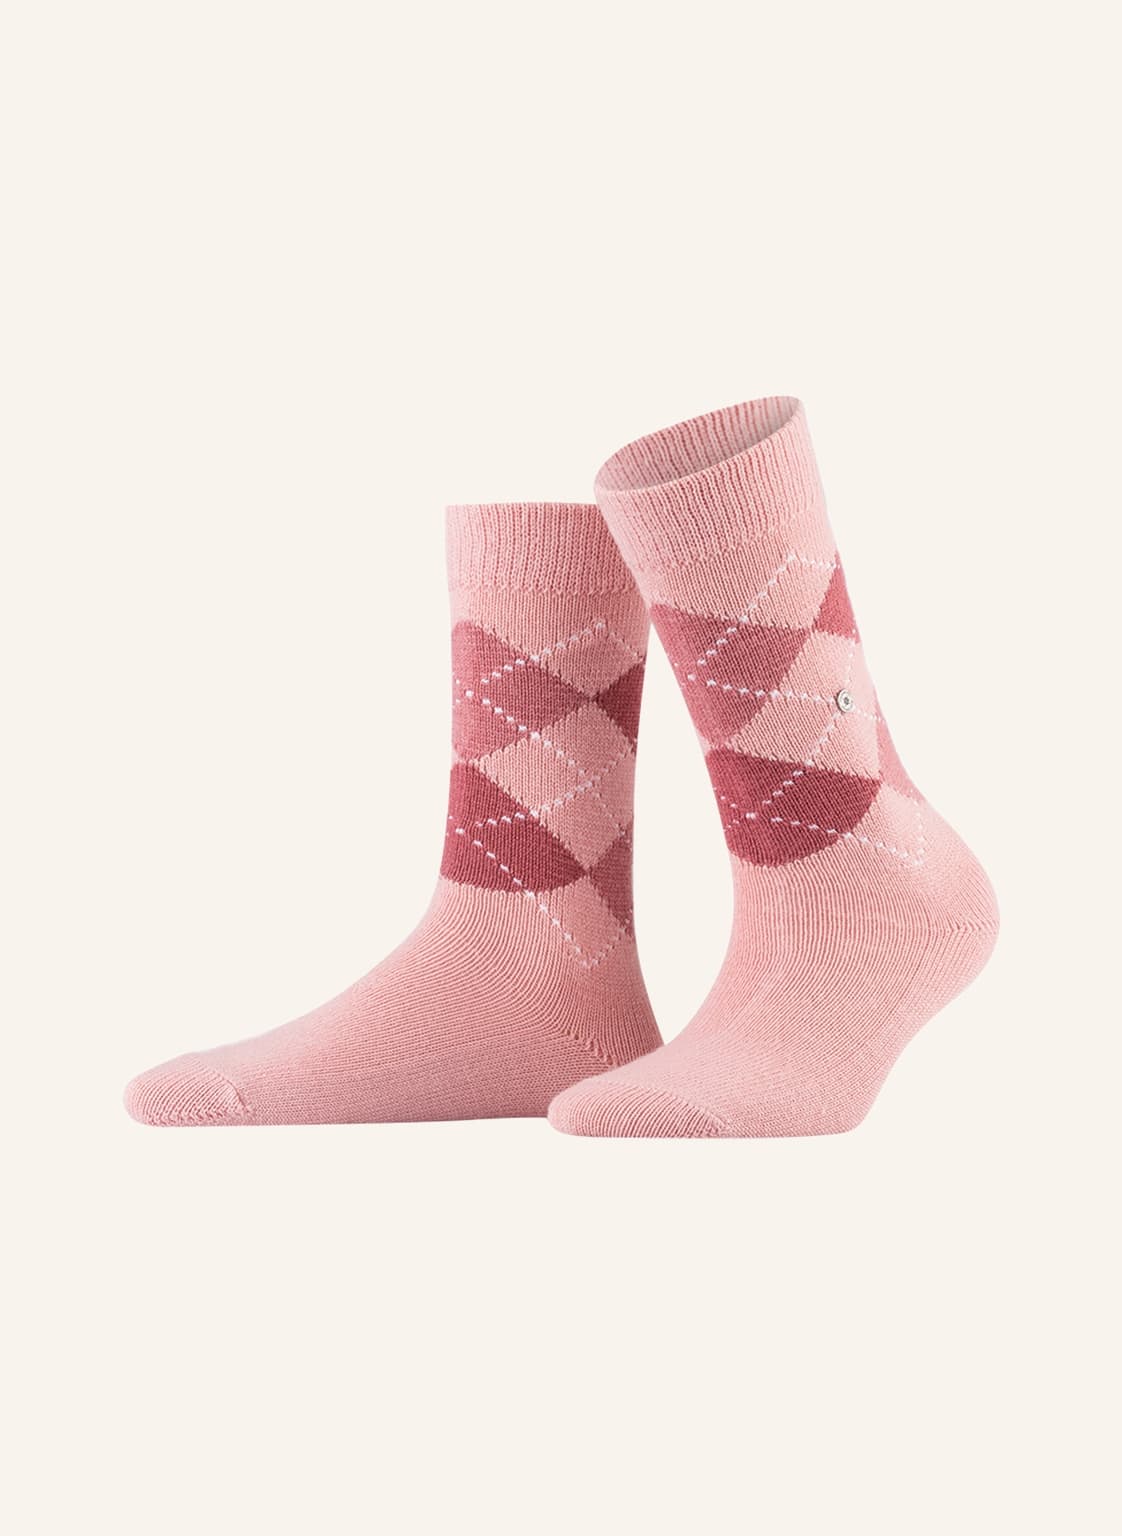 Burlington Socken Whitby pink von Burlington